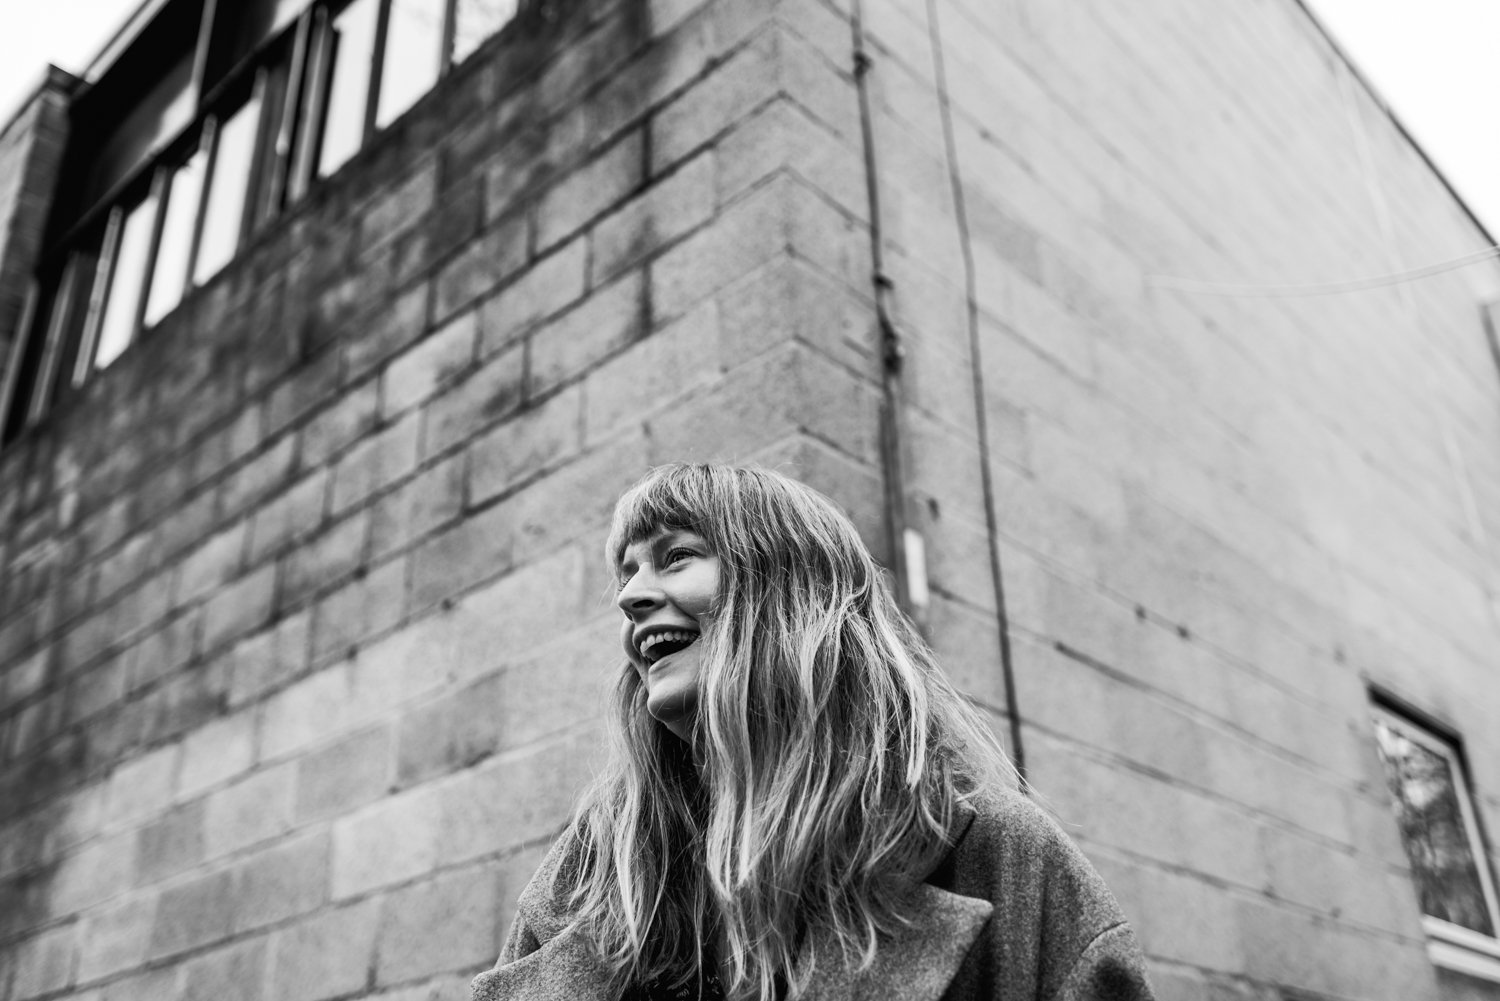  Portrait of female photographer, Ami Robertson, outside a brick building in Stoke Newington, London.  